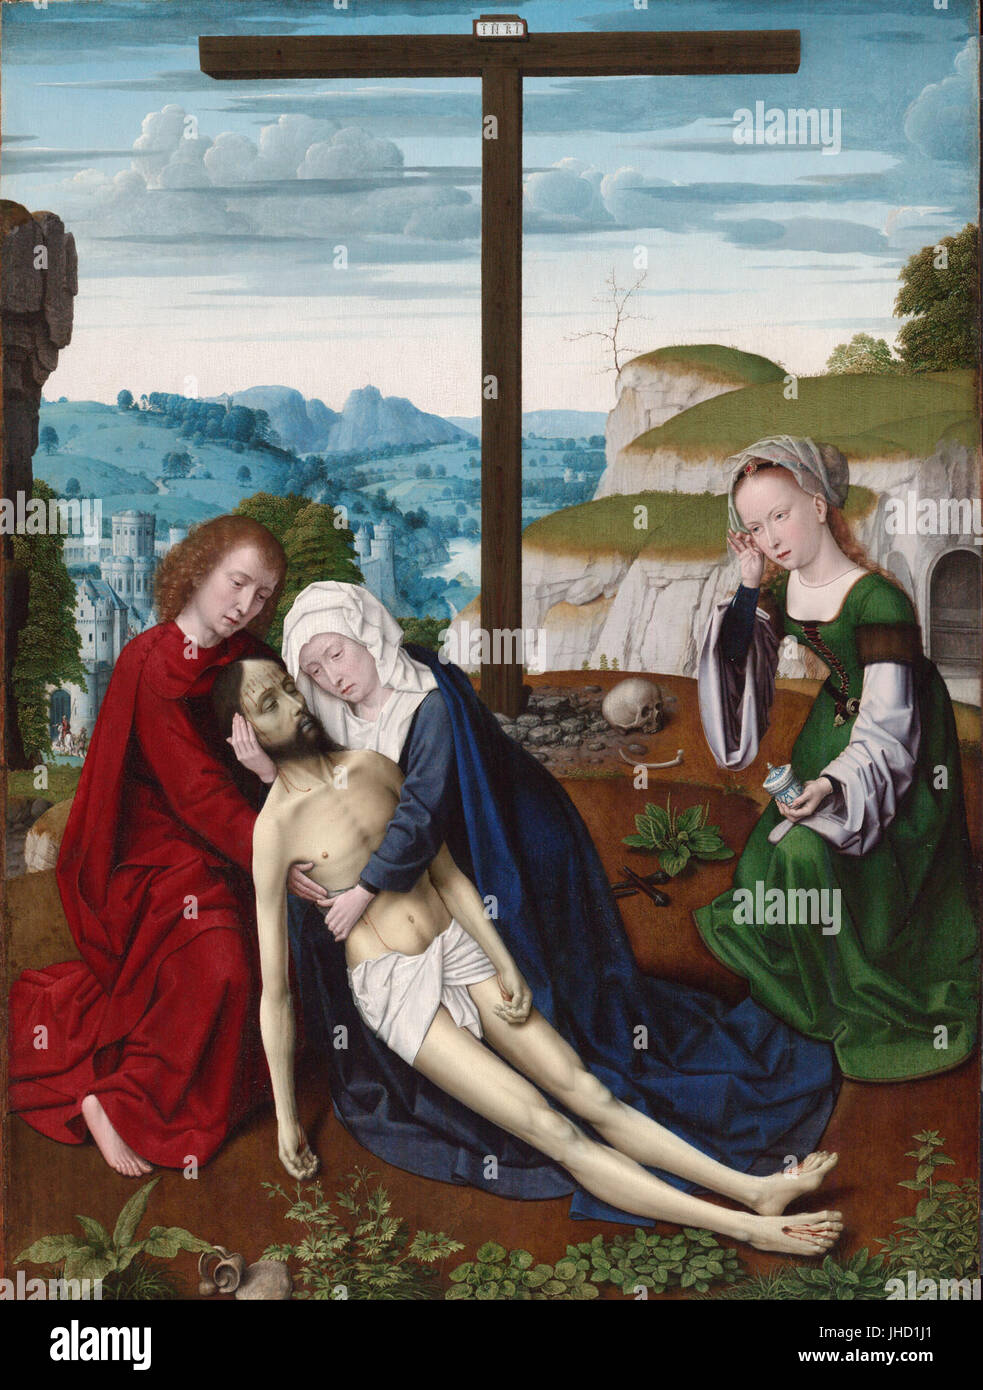 Gerard David, Netherlandish (active Bruges), first documented 1484, died 1523 - Lamentation - Stock Photo